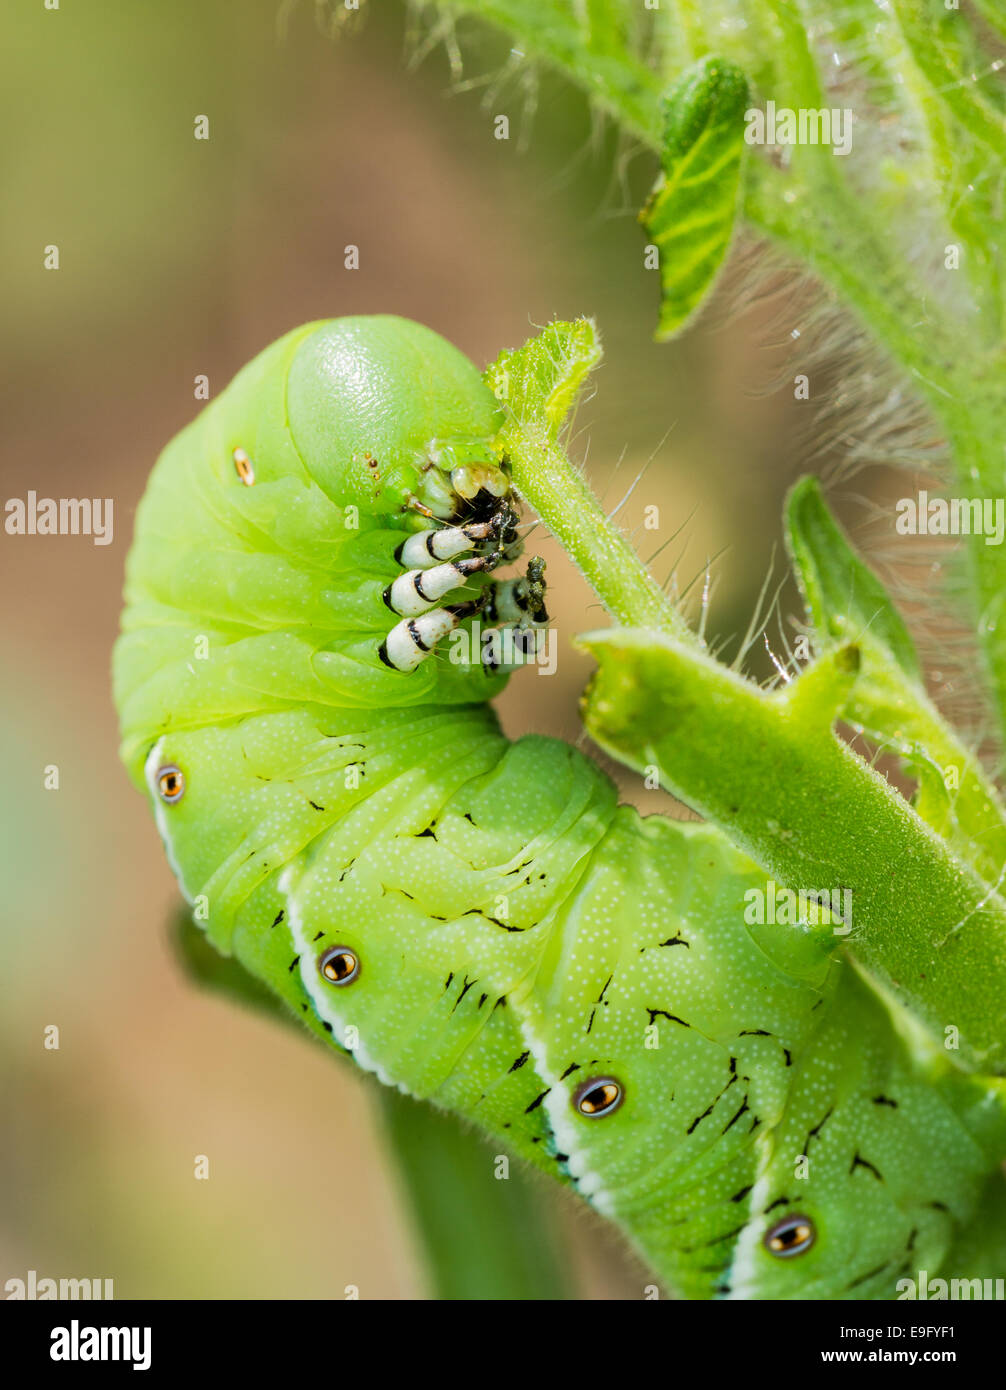 Tomato hornworm caterpillar eating plant Stock Photo